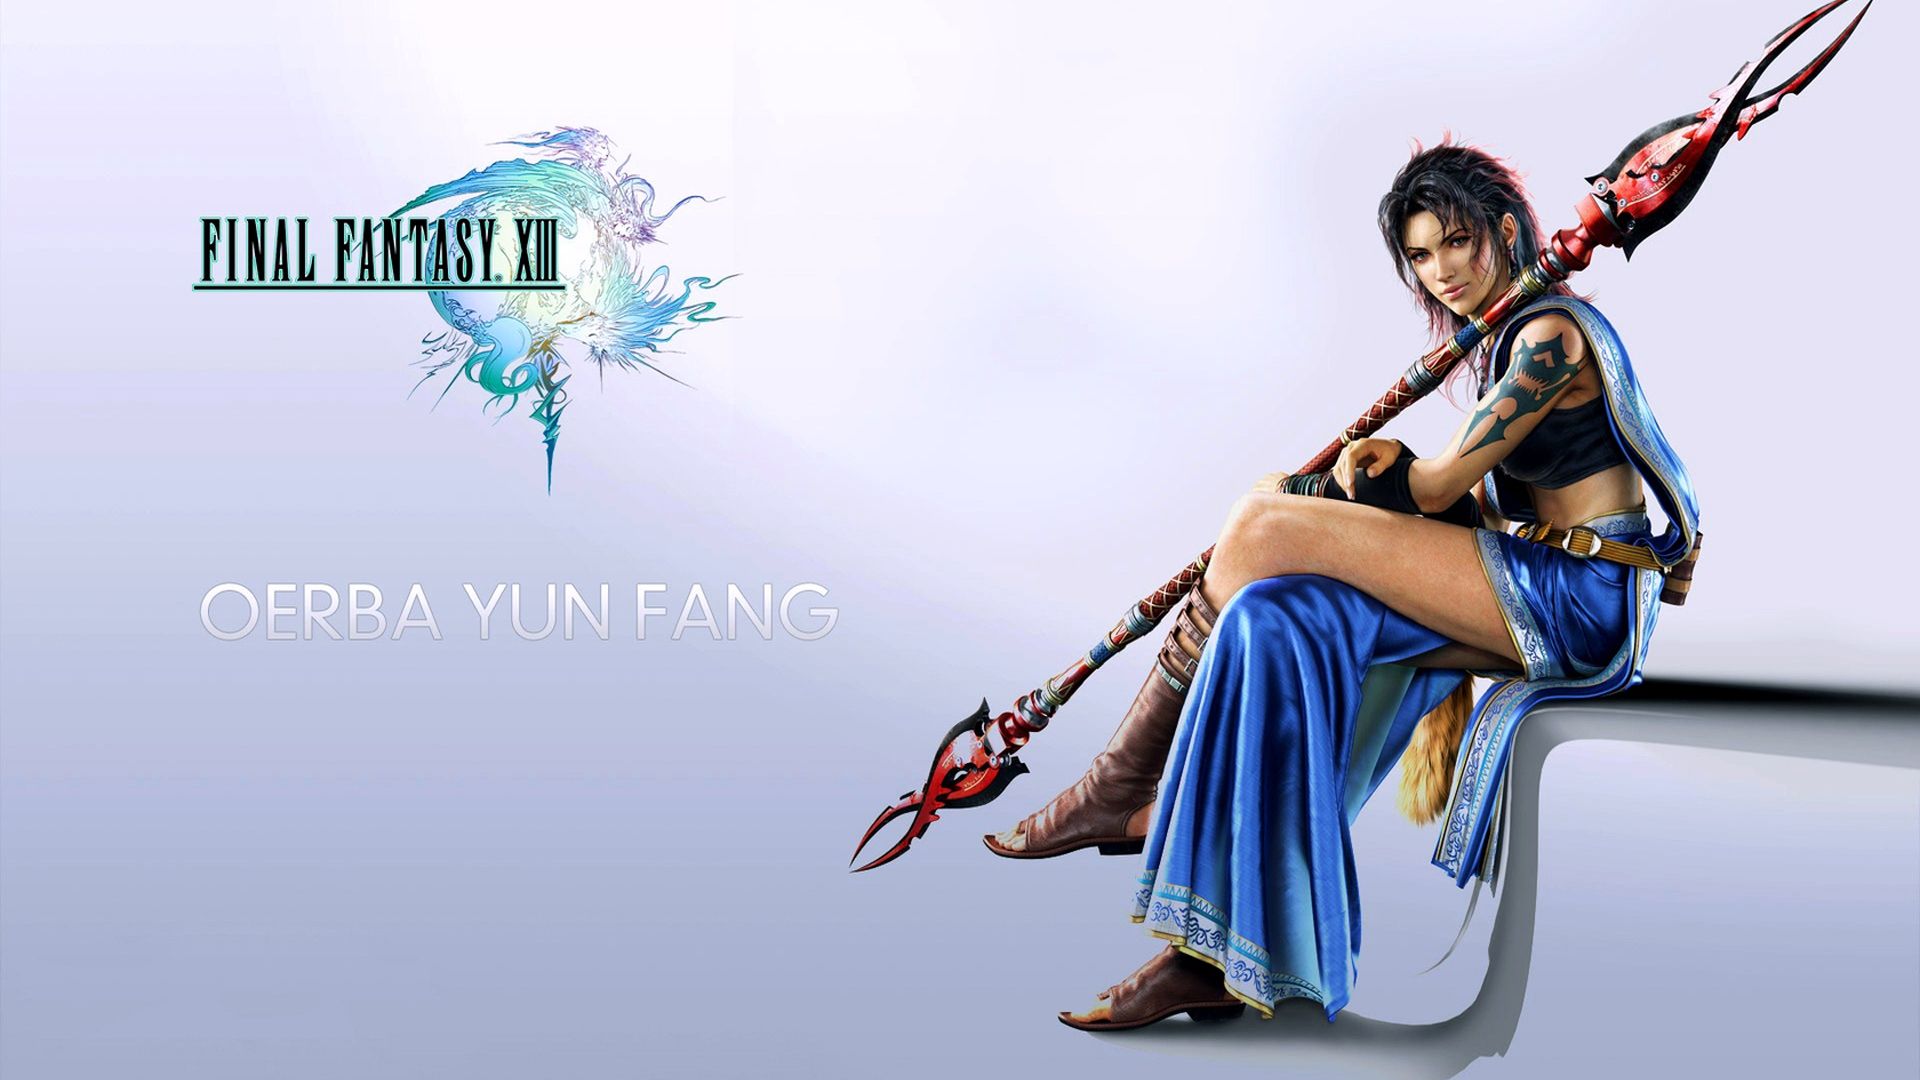 Final Fantasy Xiii Oerba Yun Fang Wallpaper Live HD